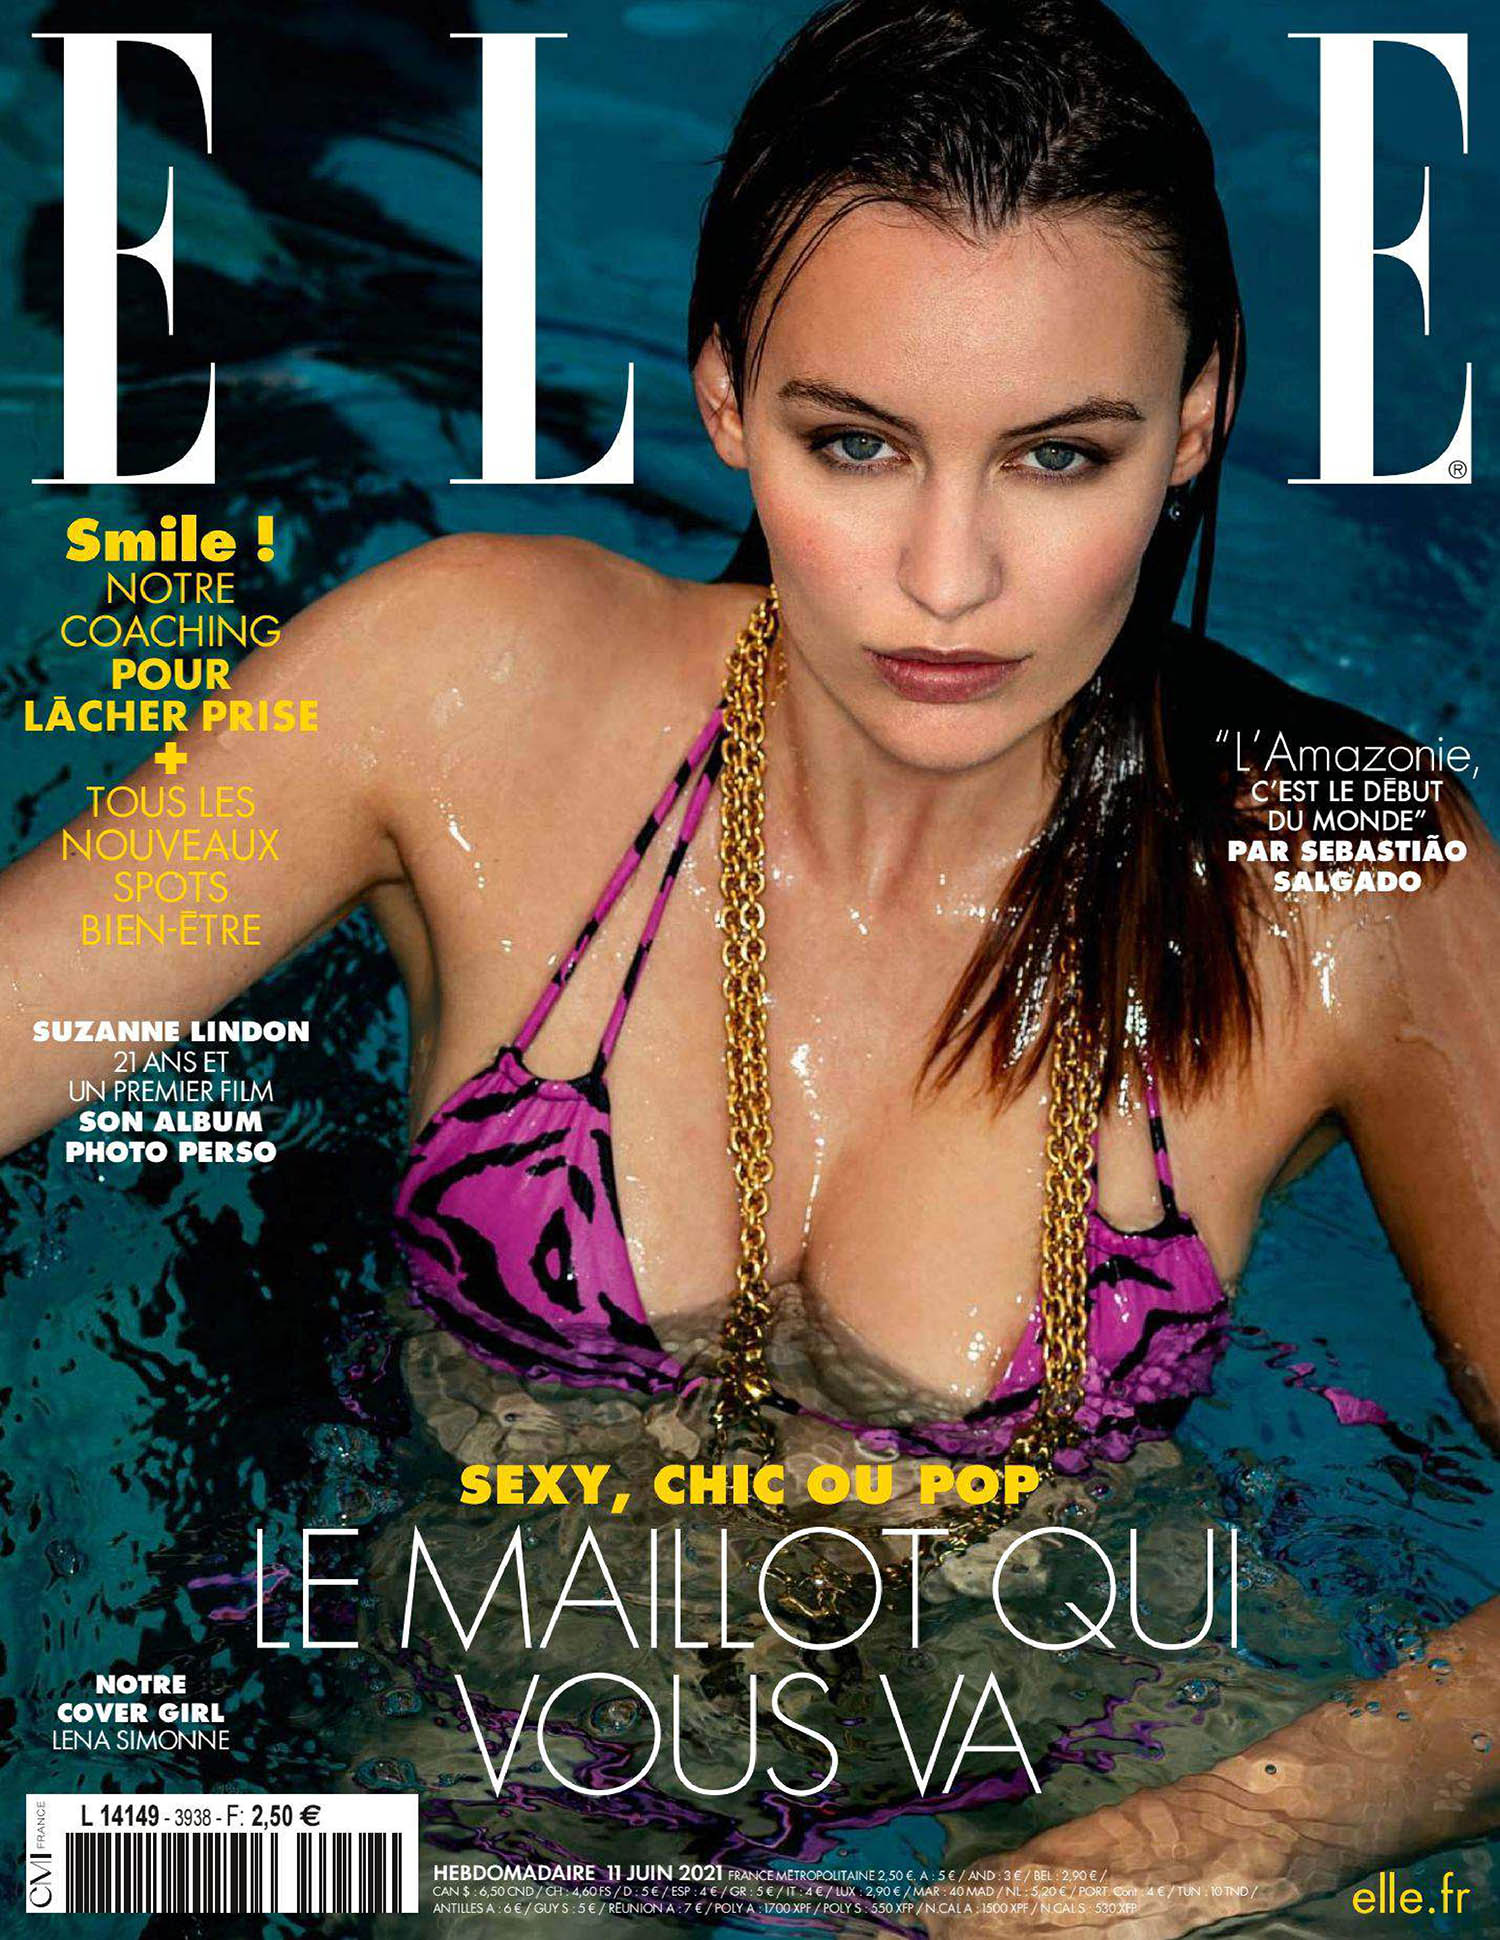 Lena Simonne covers Elle France June 11th, 2021 by Gilles Bensimon